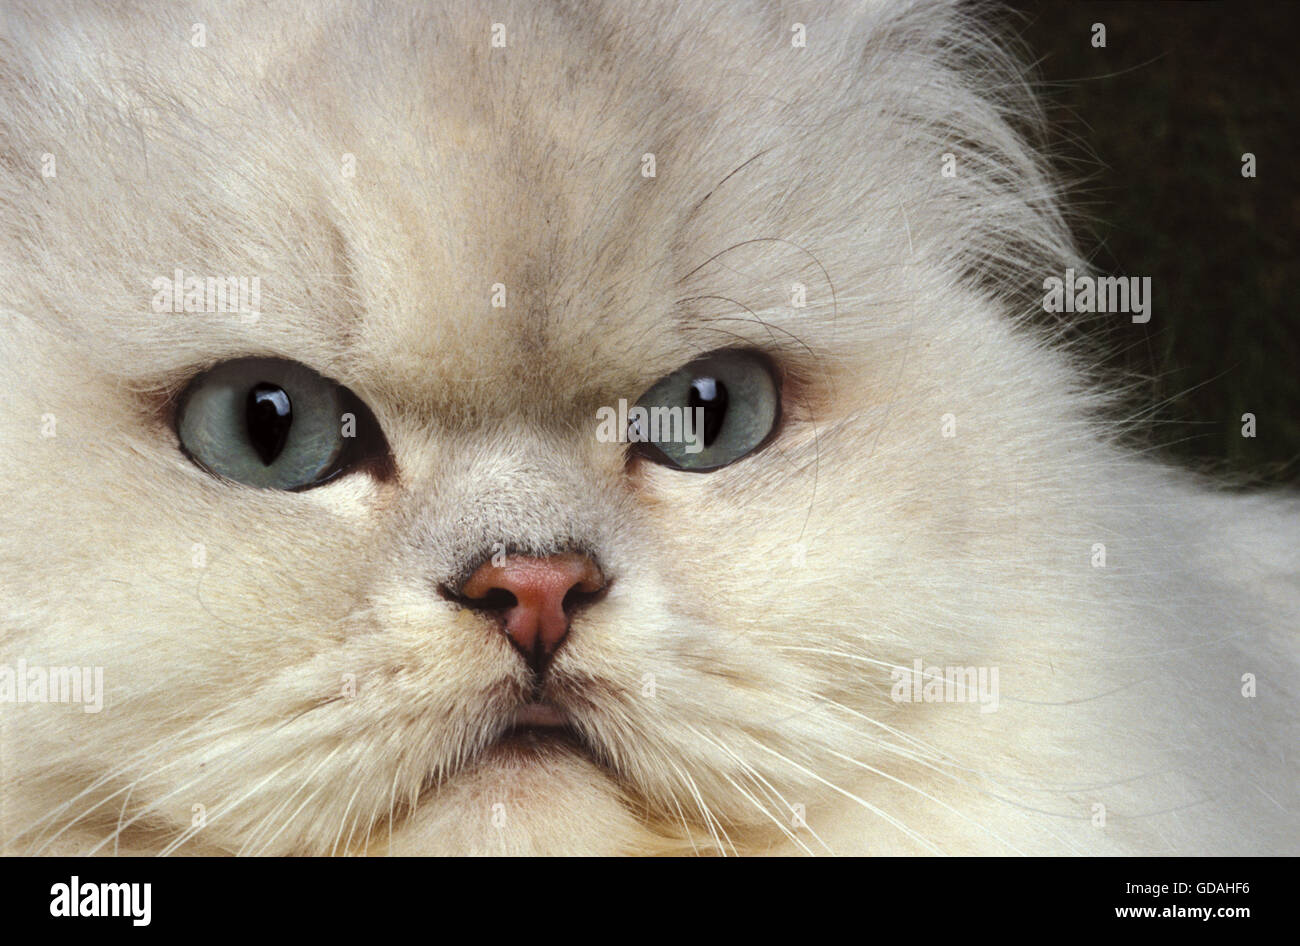 CHINCHILLA PERSIAN CAT, HEAD CLOSE-UP OF ADULT Stock Photo